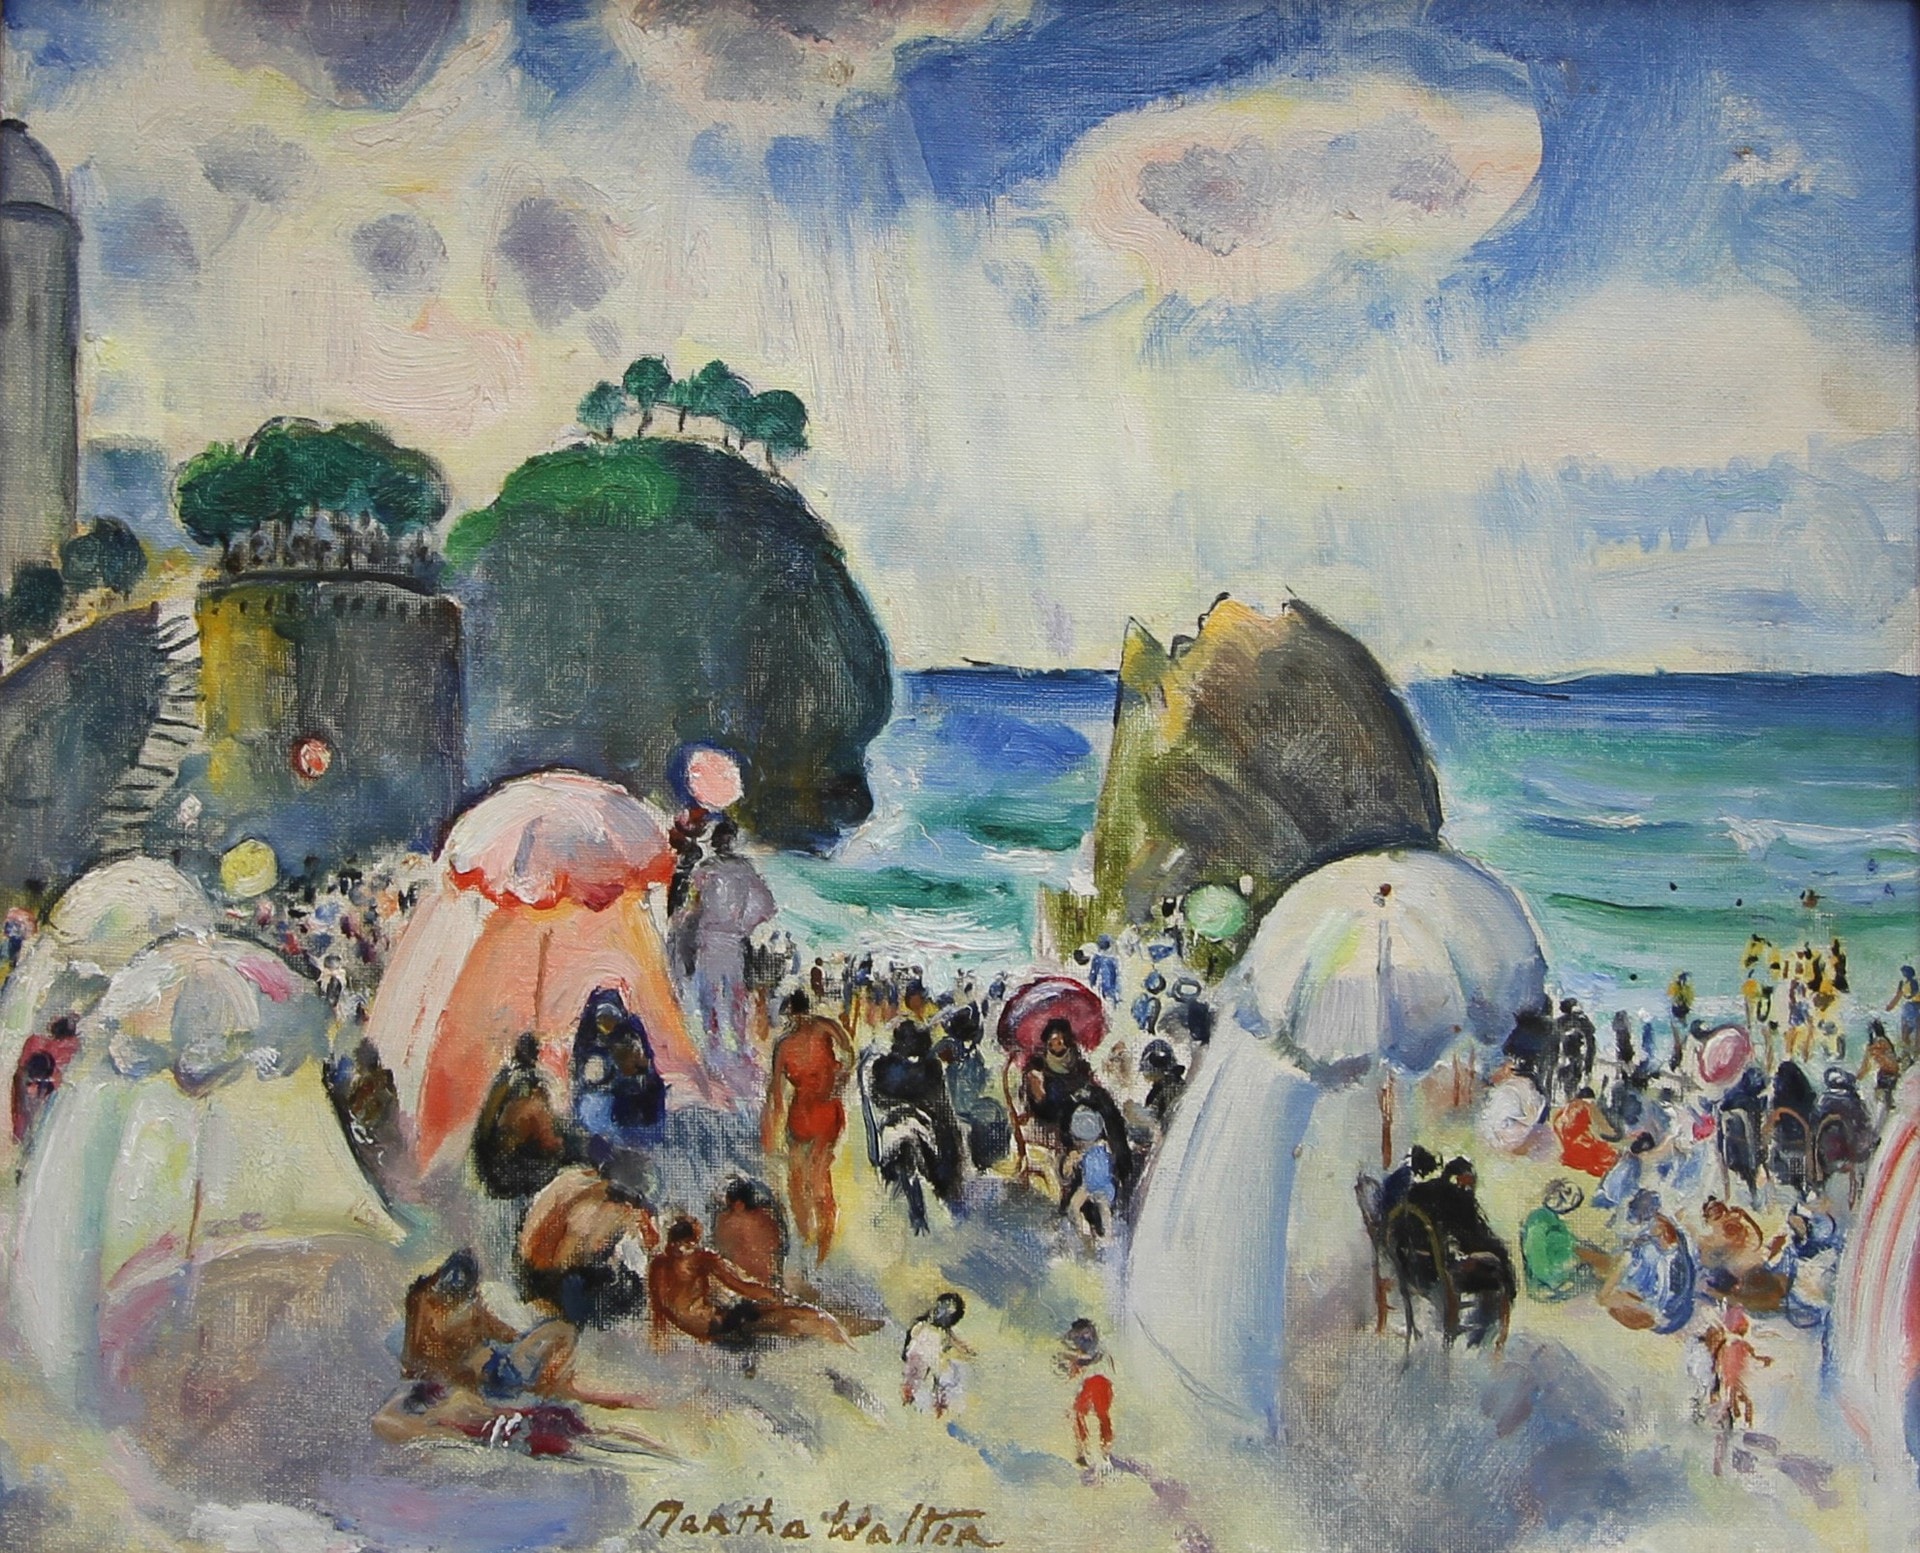 Walter Late Afternoon. A joyful beach scene full of life- people, umbrellas, and the sea.